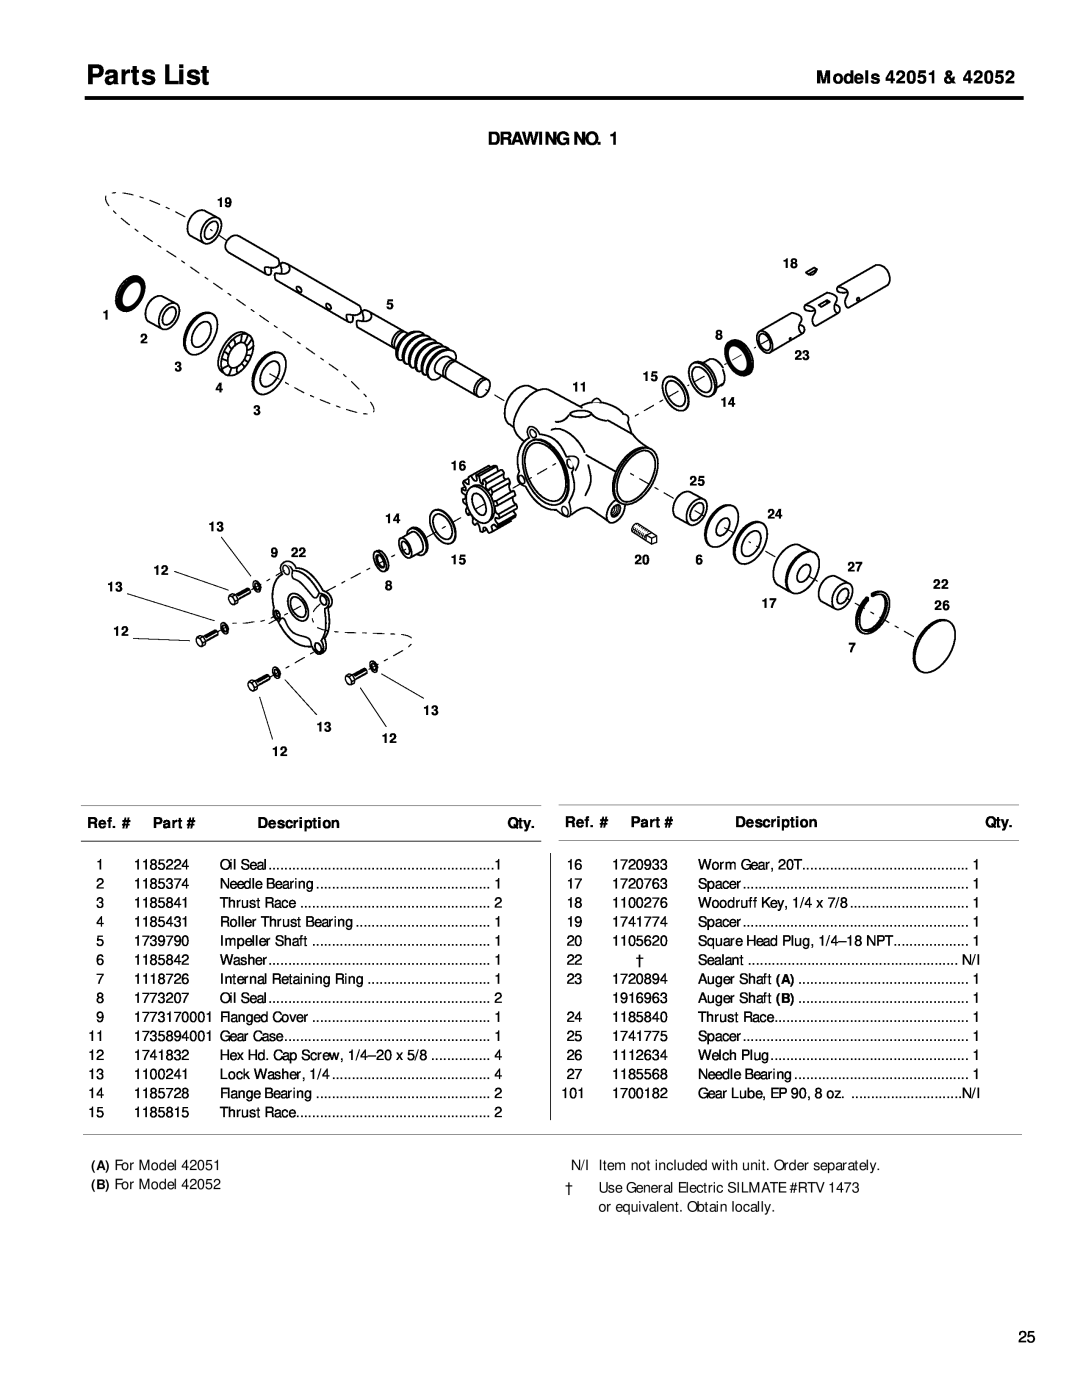 Troy-Bilt 42051, 42052 owner manual Parts List, Models, Drawing No, Ref. #, Description 